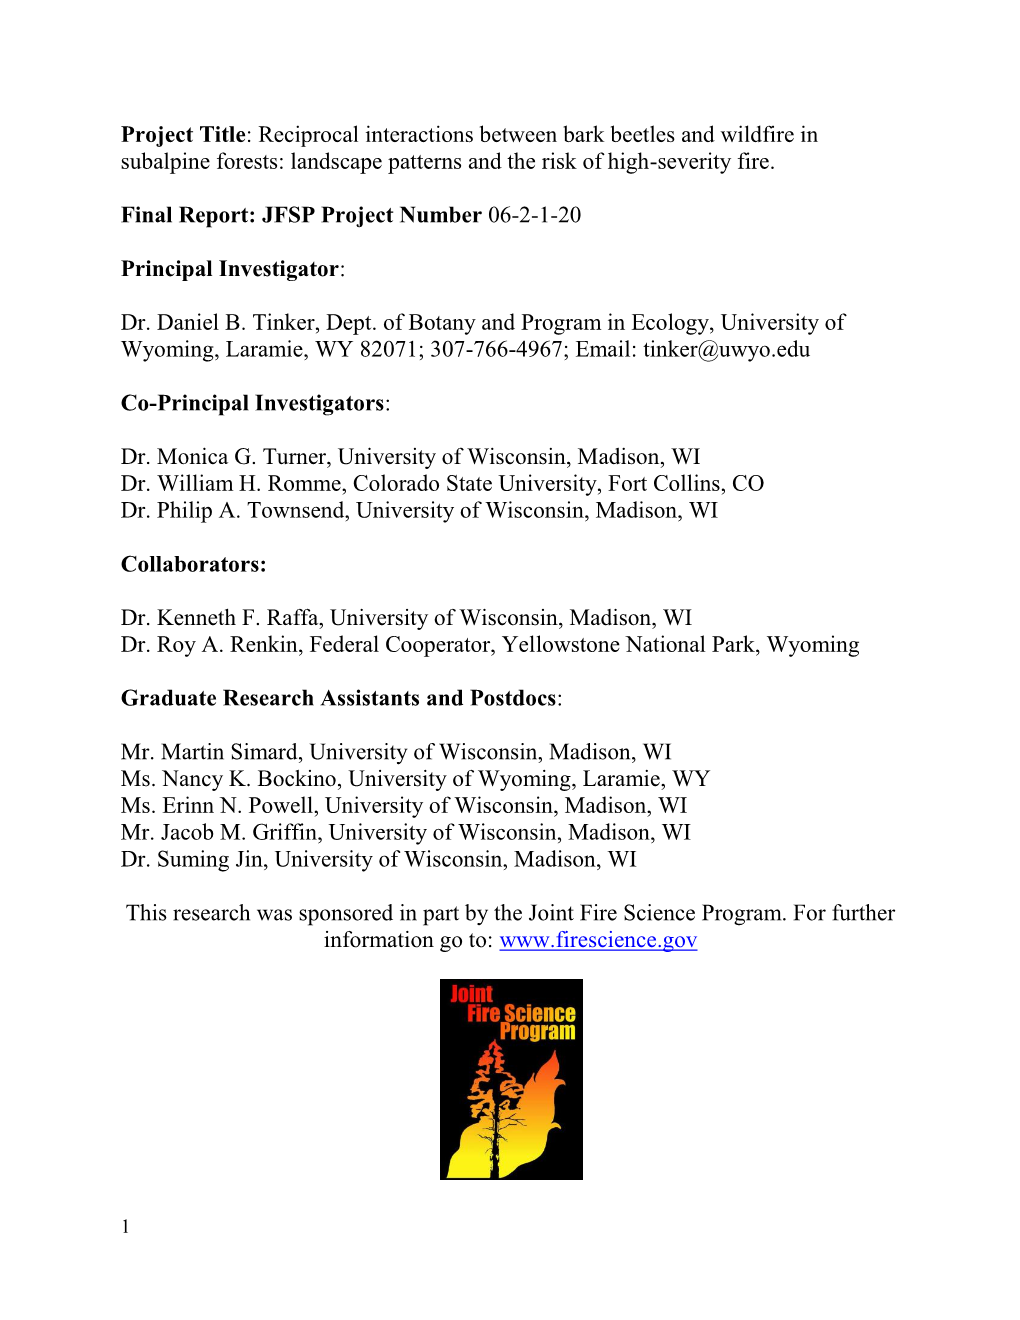 Final Report: JFSP Project Number 06-2-1-20